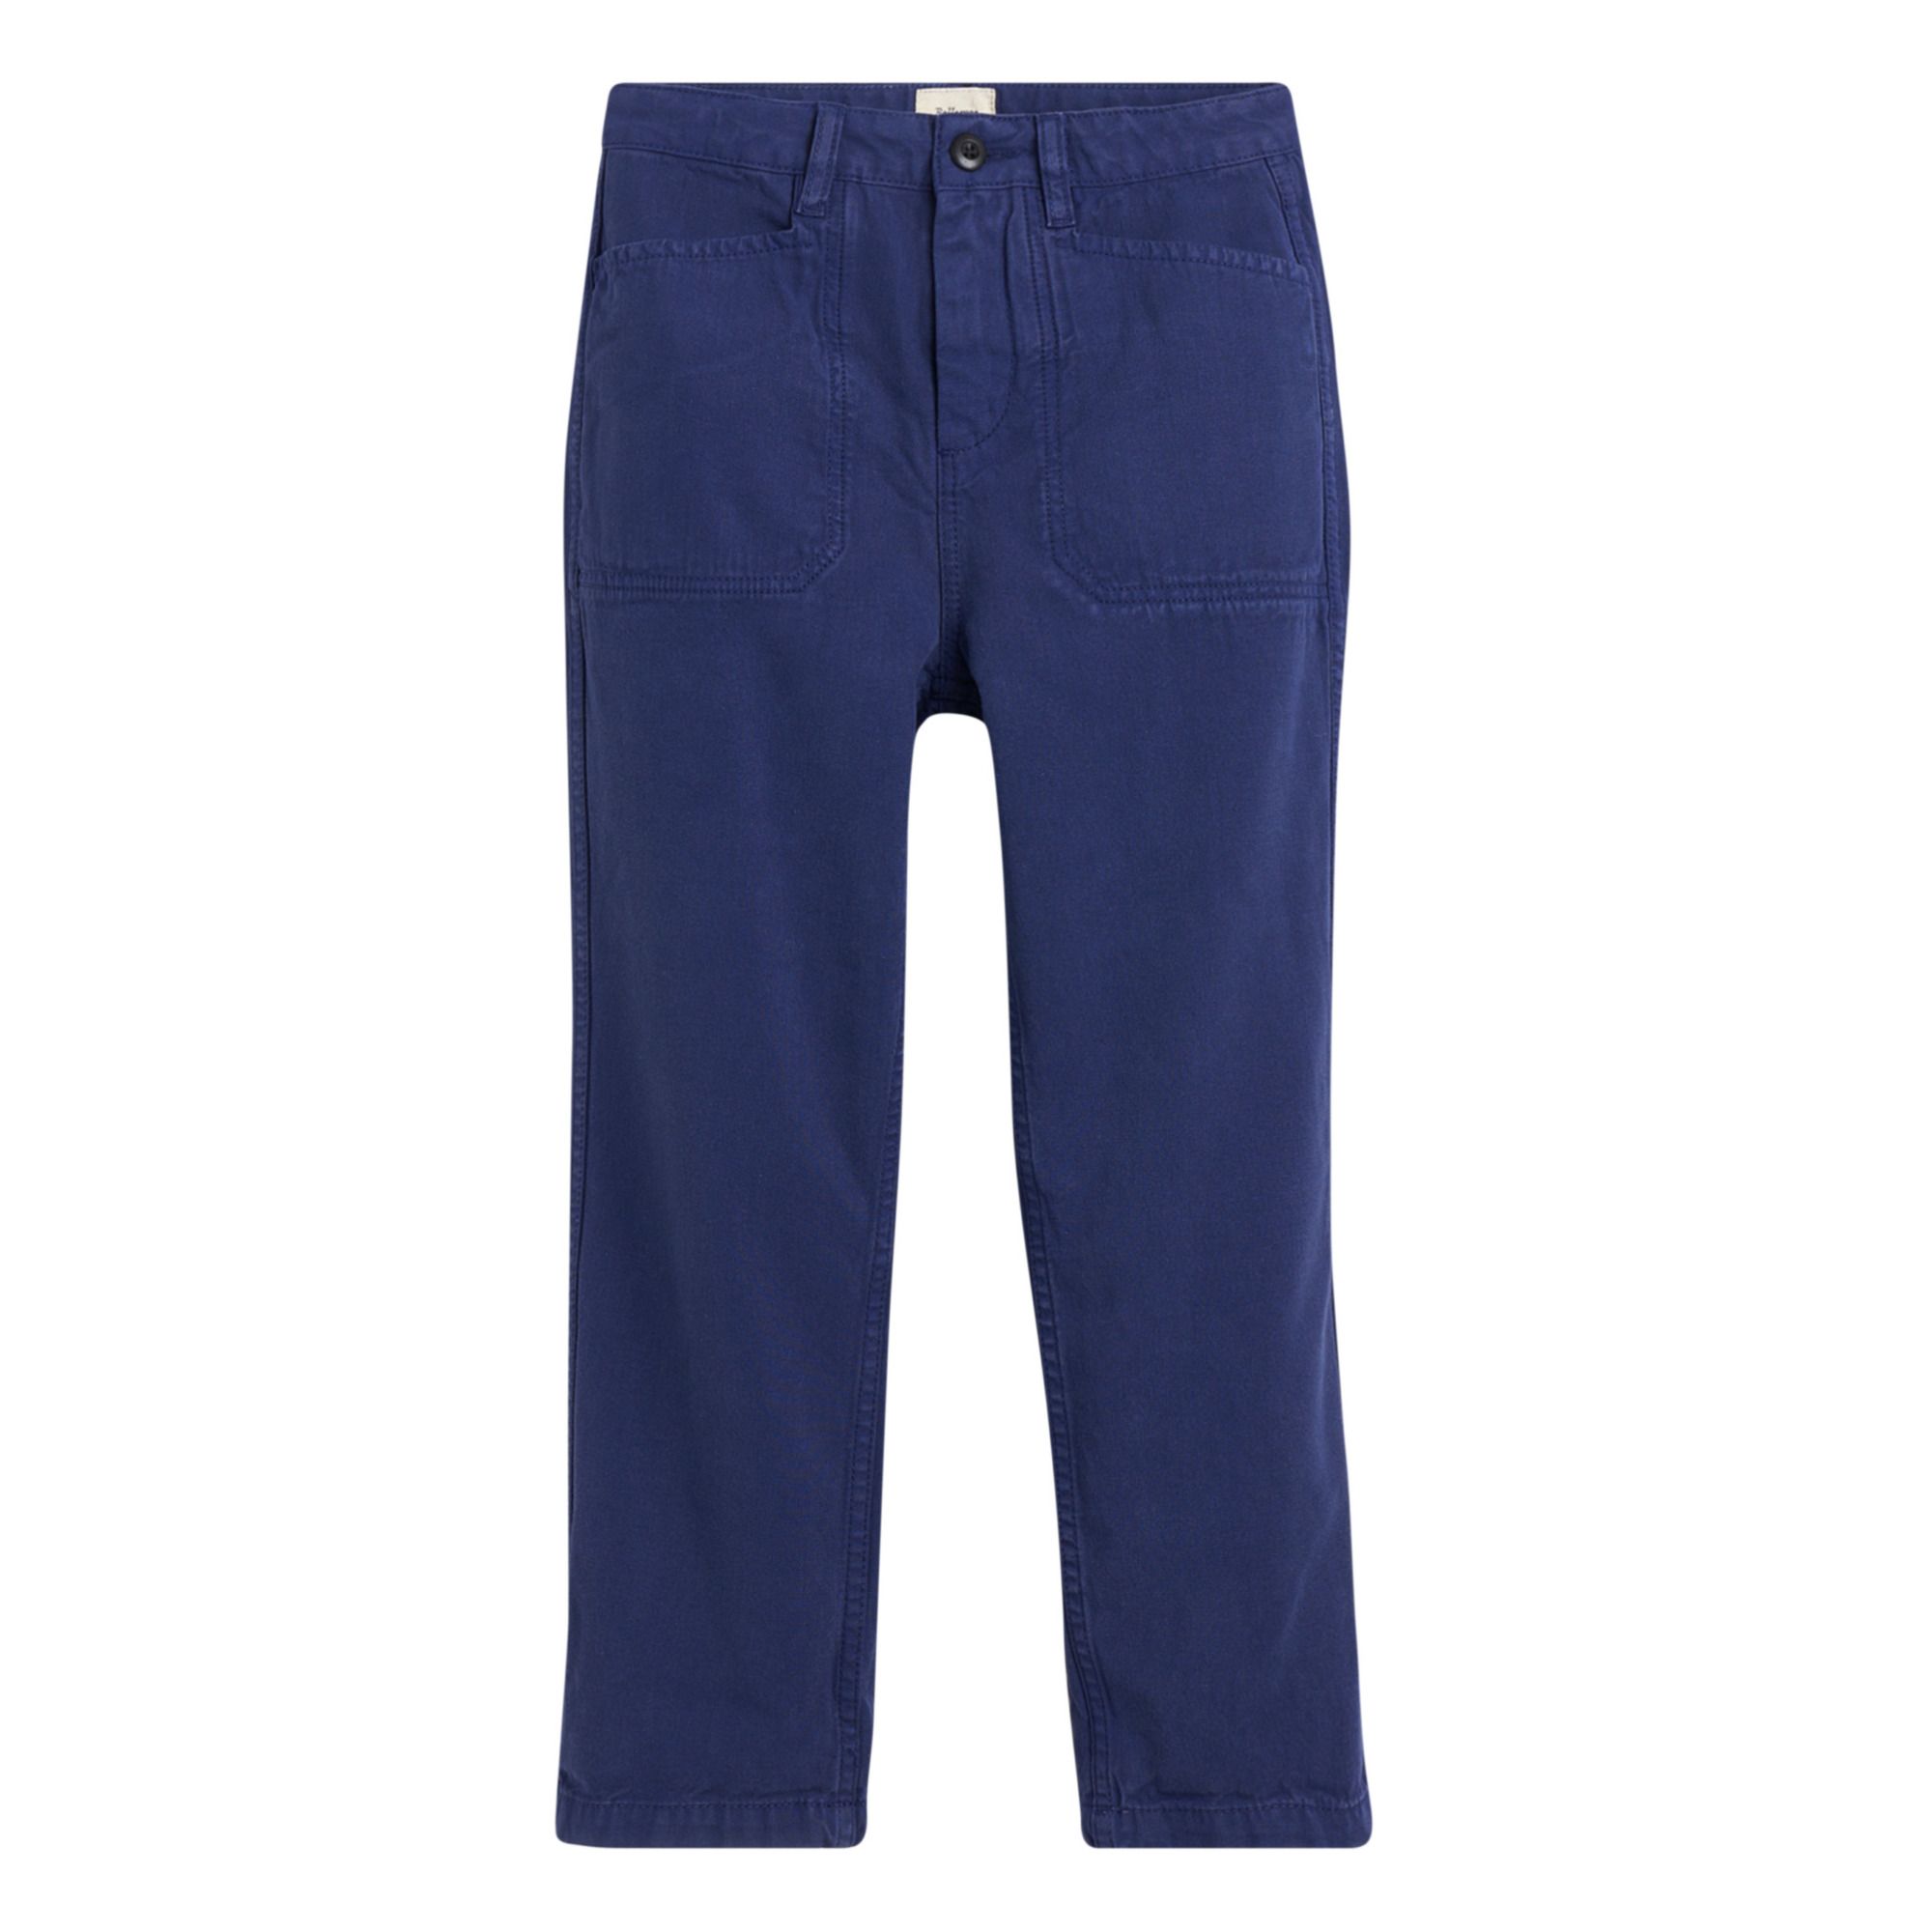 Bellerose - Pantalon Droit Perrig - Garçon - Bleu indigo